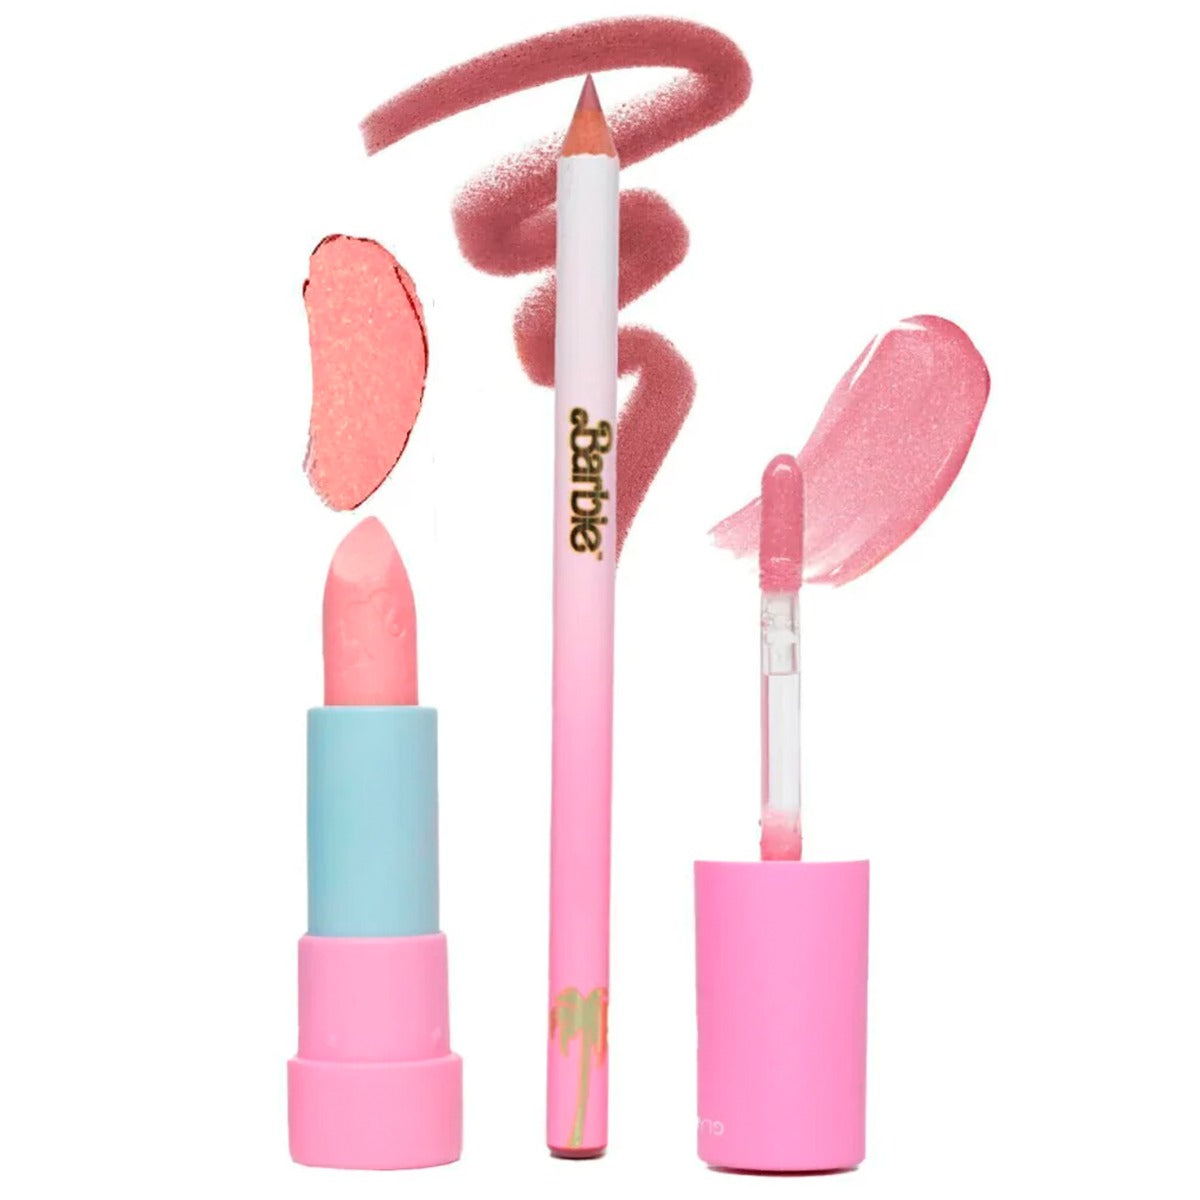 Barbie X Glamlite Out of Office Lip Kit